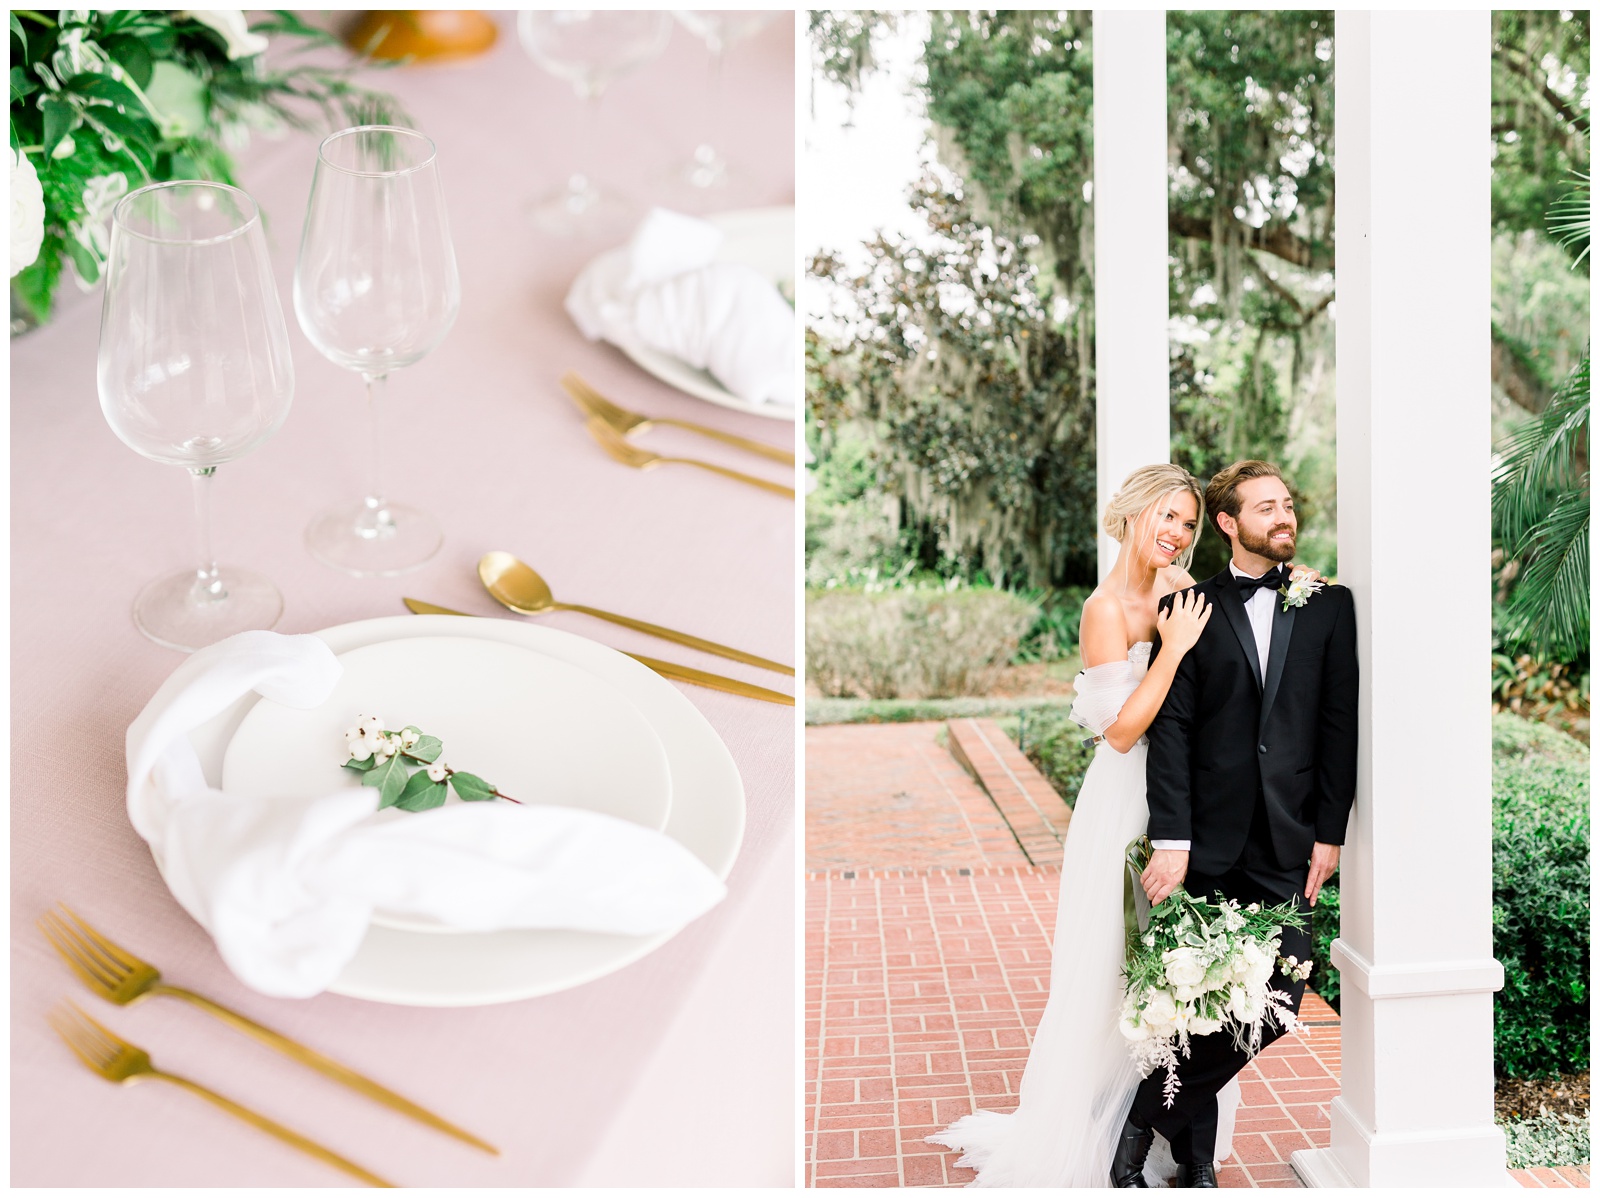 Cypress Grove Estate wedding in Orlando, Florida